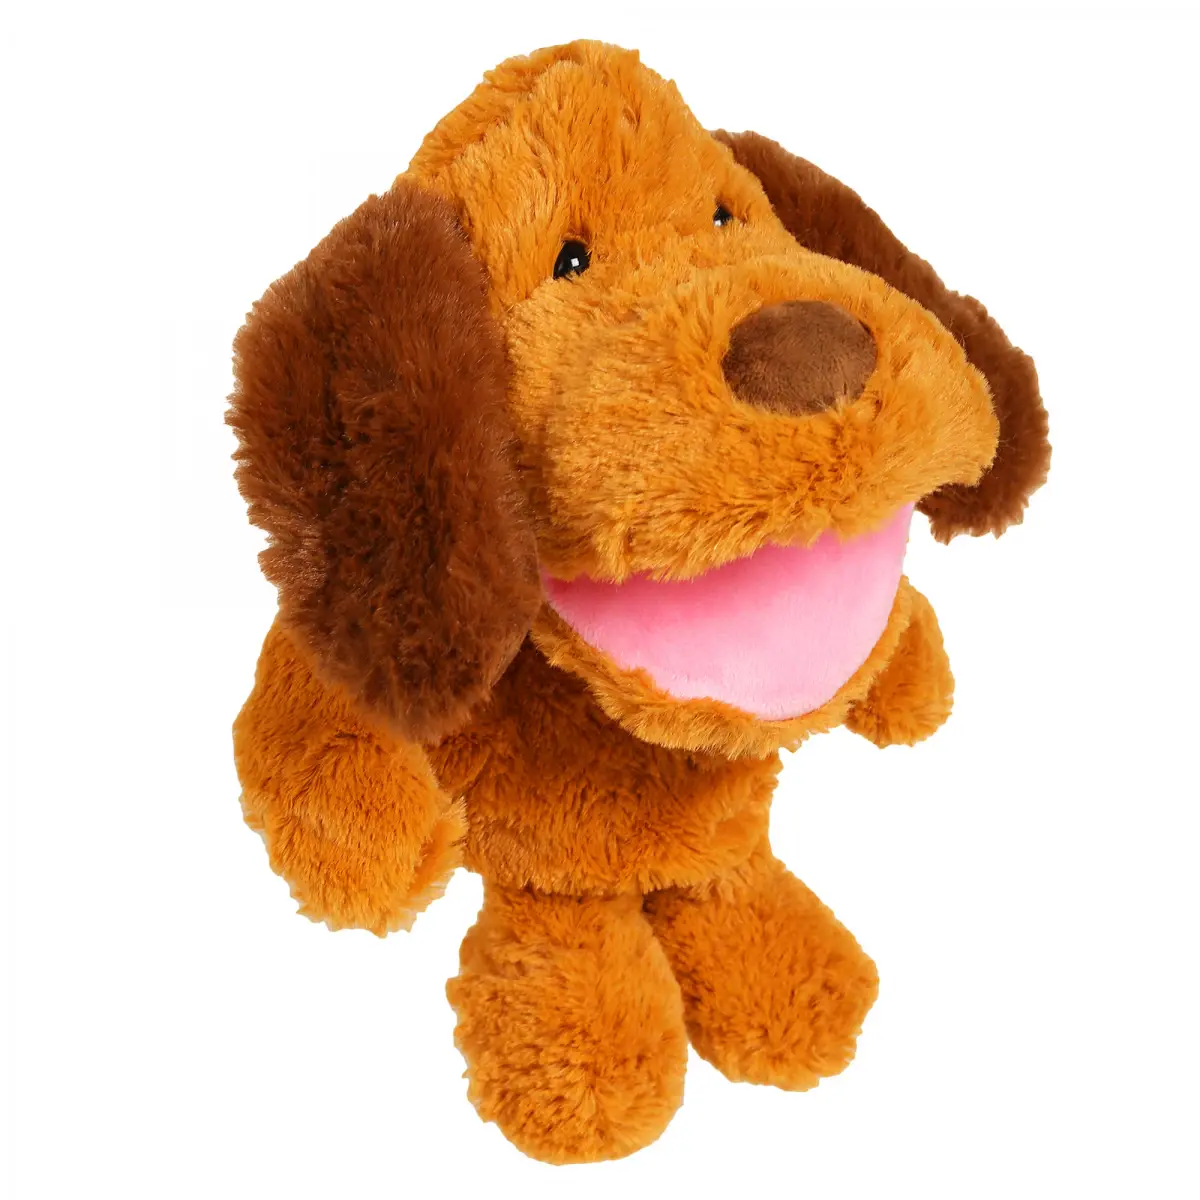 Hamleys Pugs & Play Dog Talking Hand Puppet, 3Y+, Brown